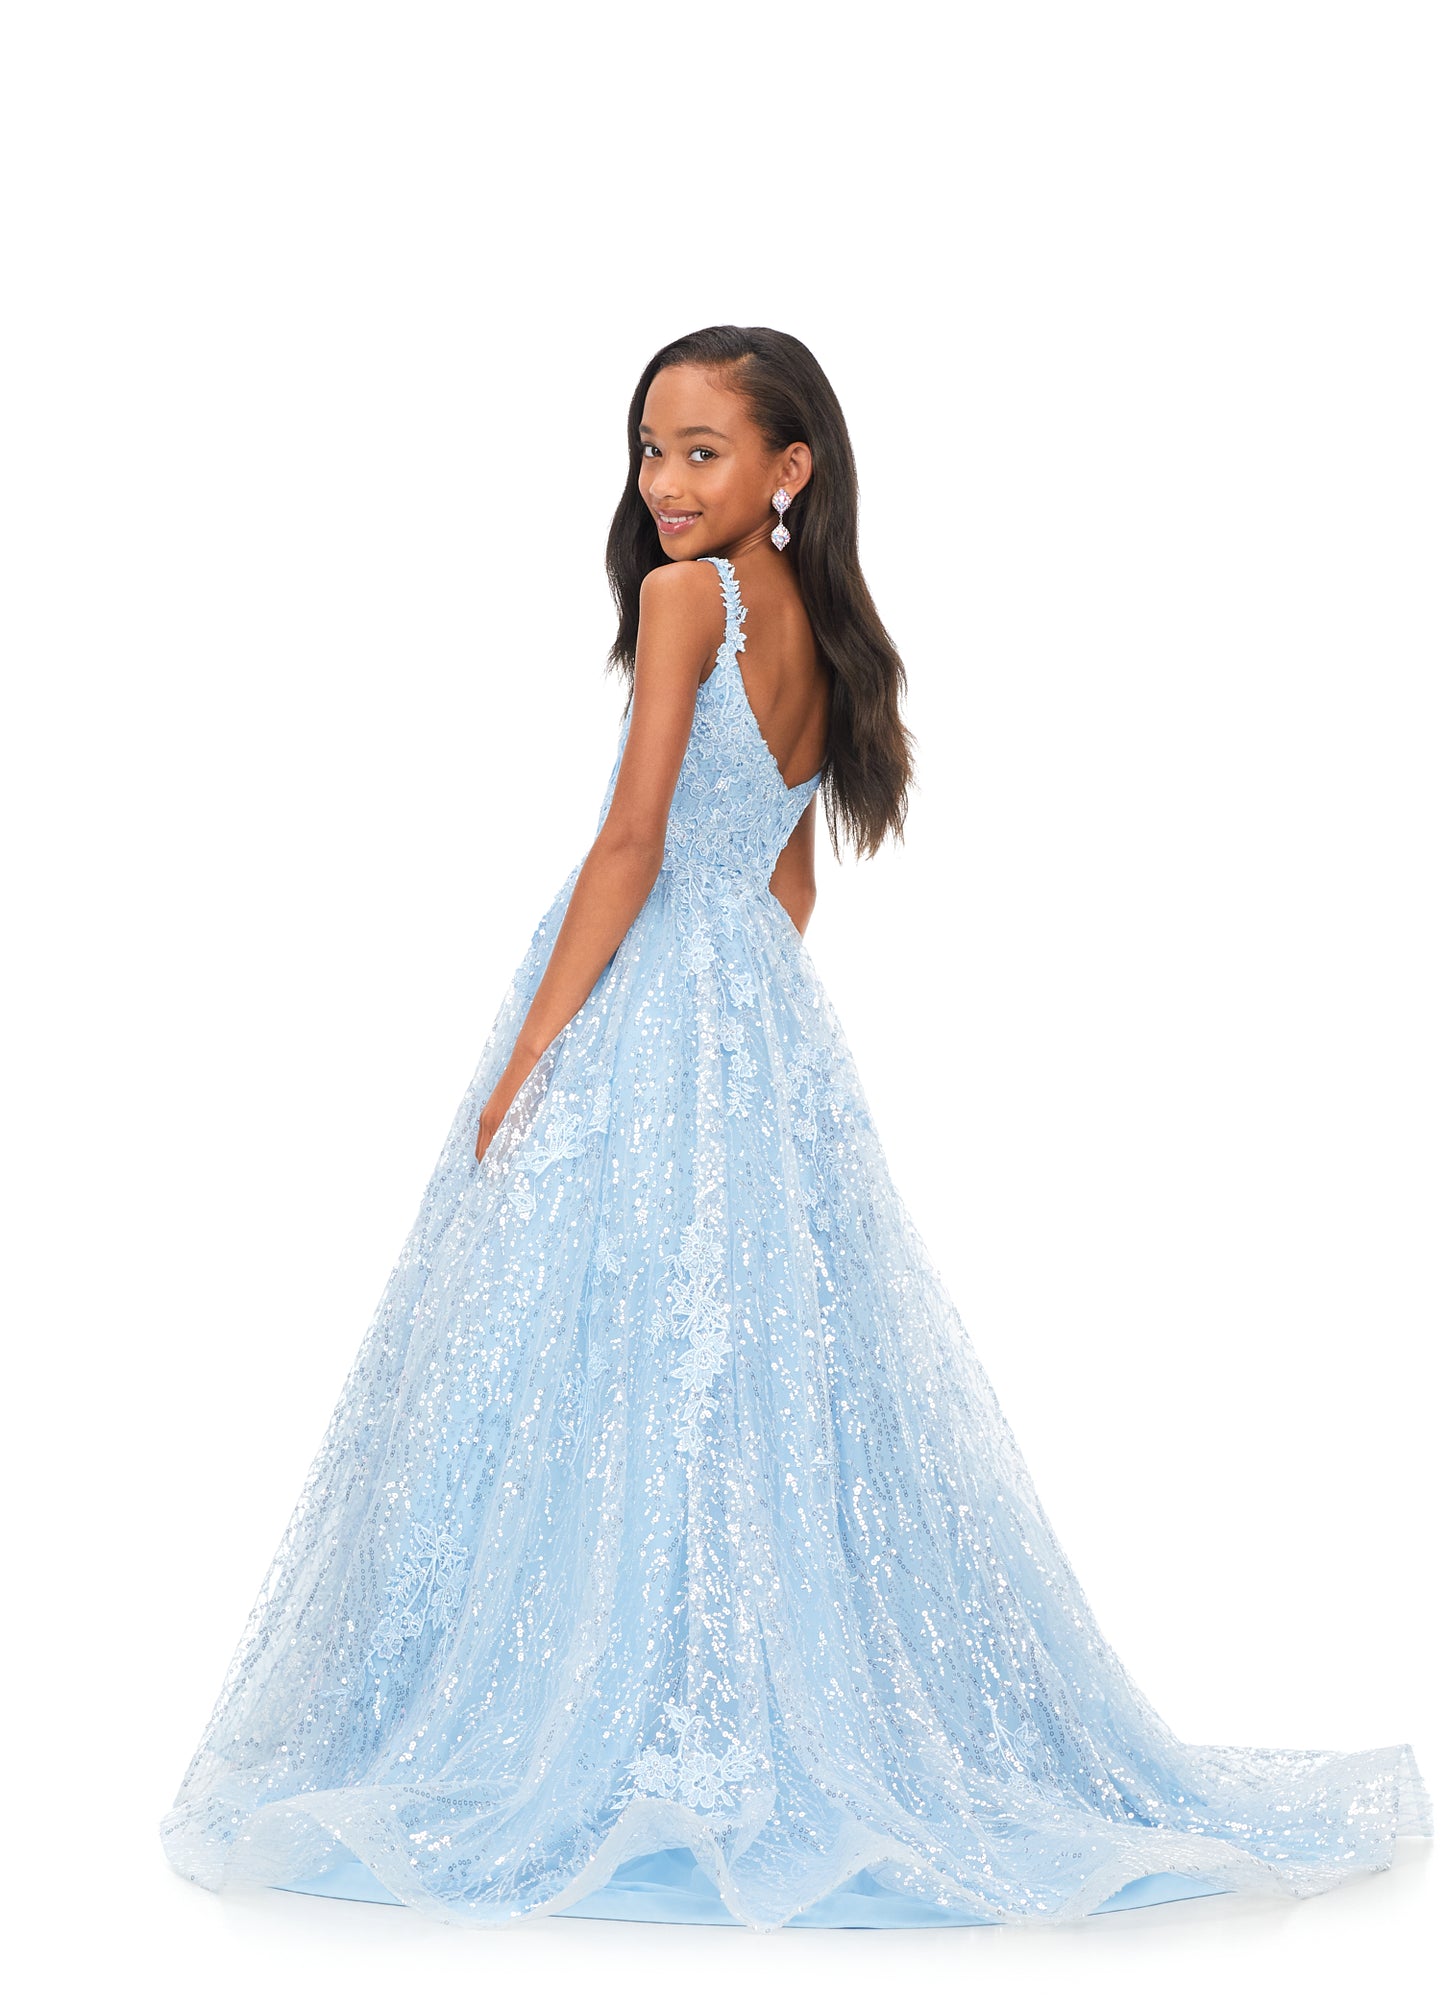 Ashley Lauren Kids 8185 Size 10, 14 LILAC Girls Preteens Glitter Lace Formal Dress Ball Gown